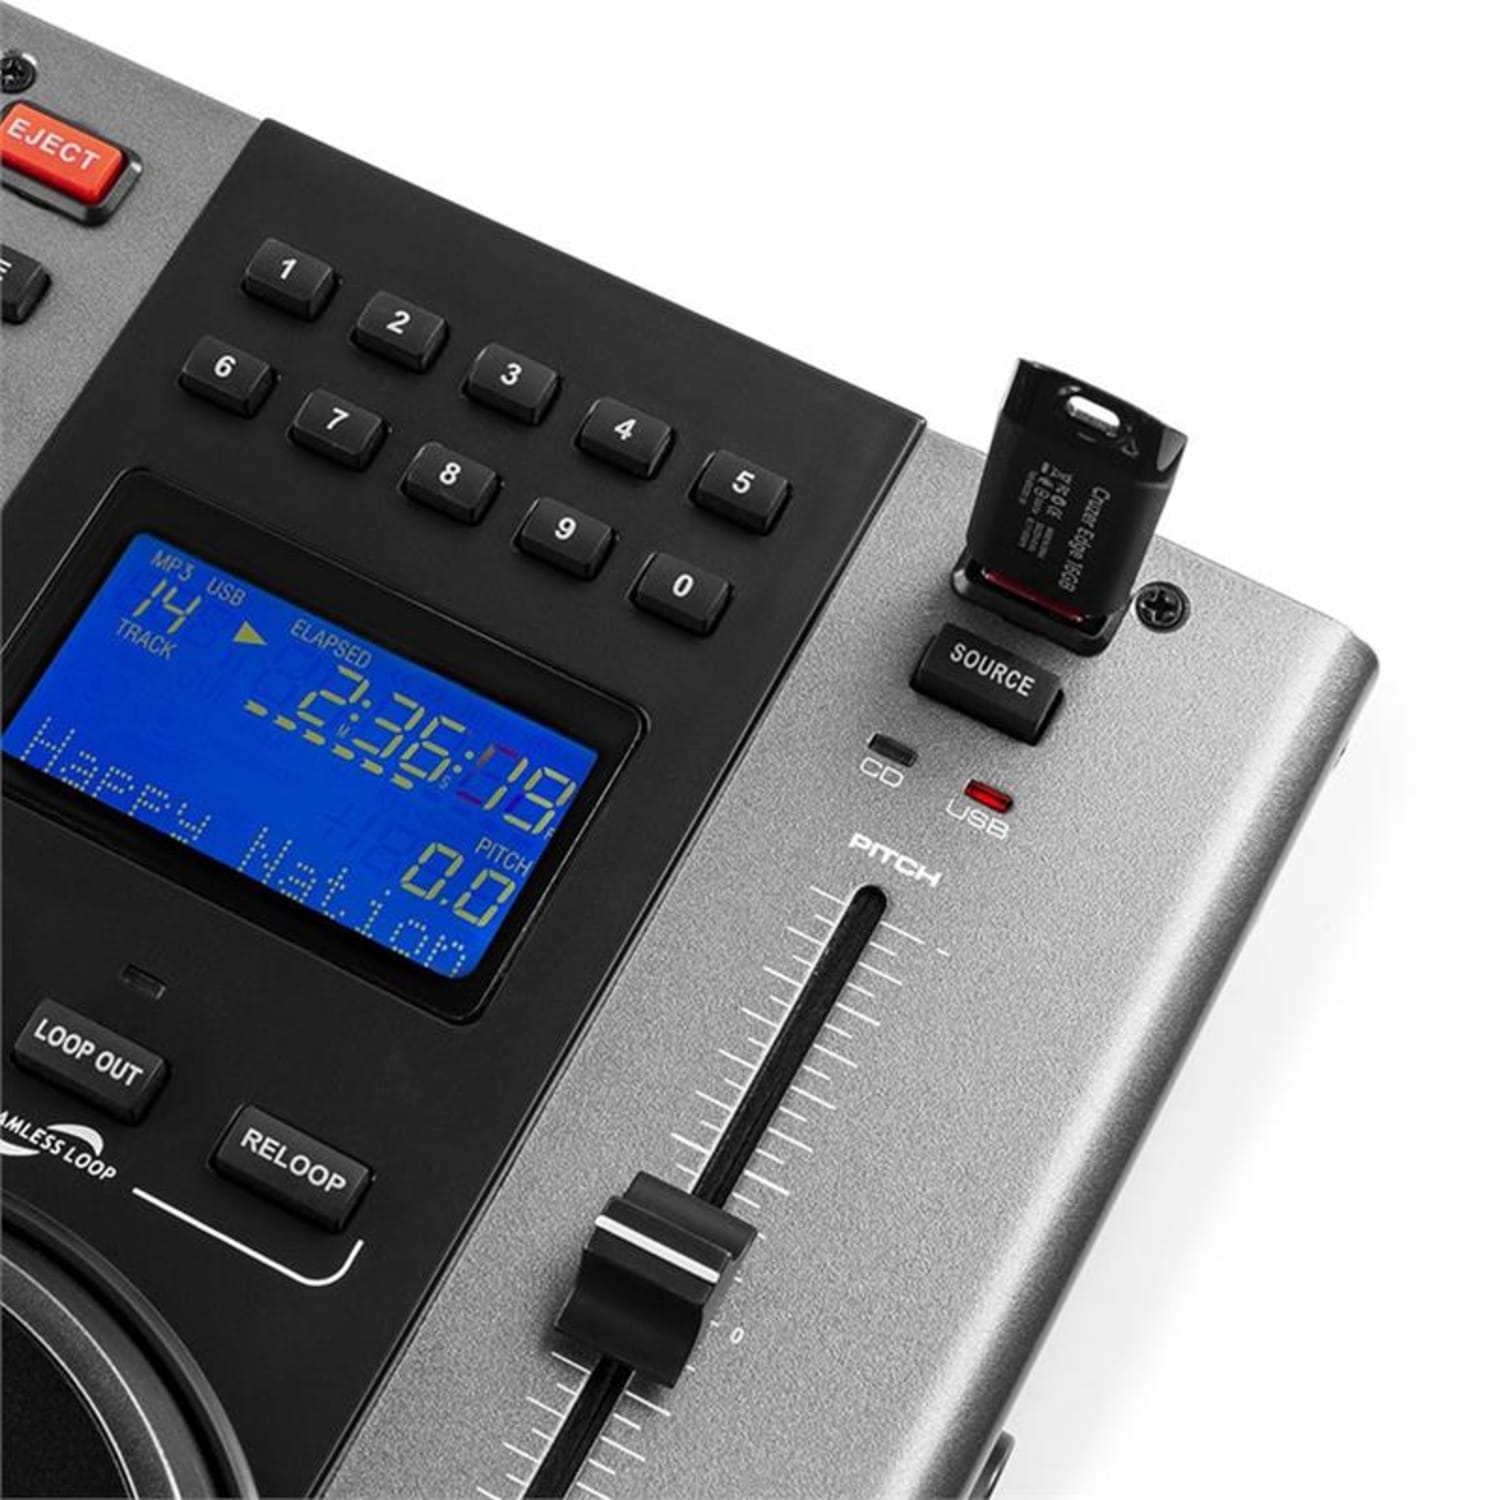 Schwarz CDJ450 Workstation, VONYX DJ